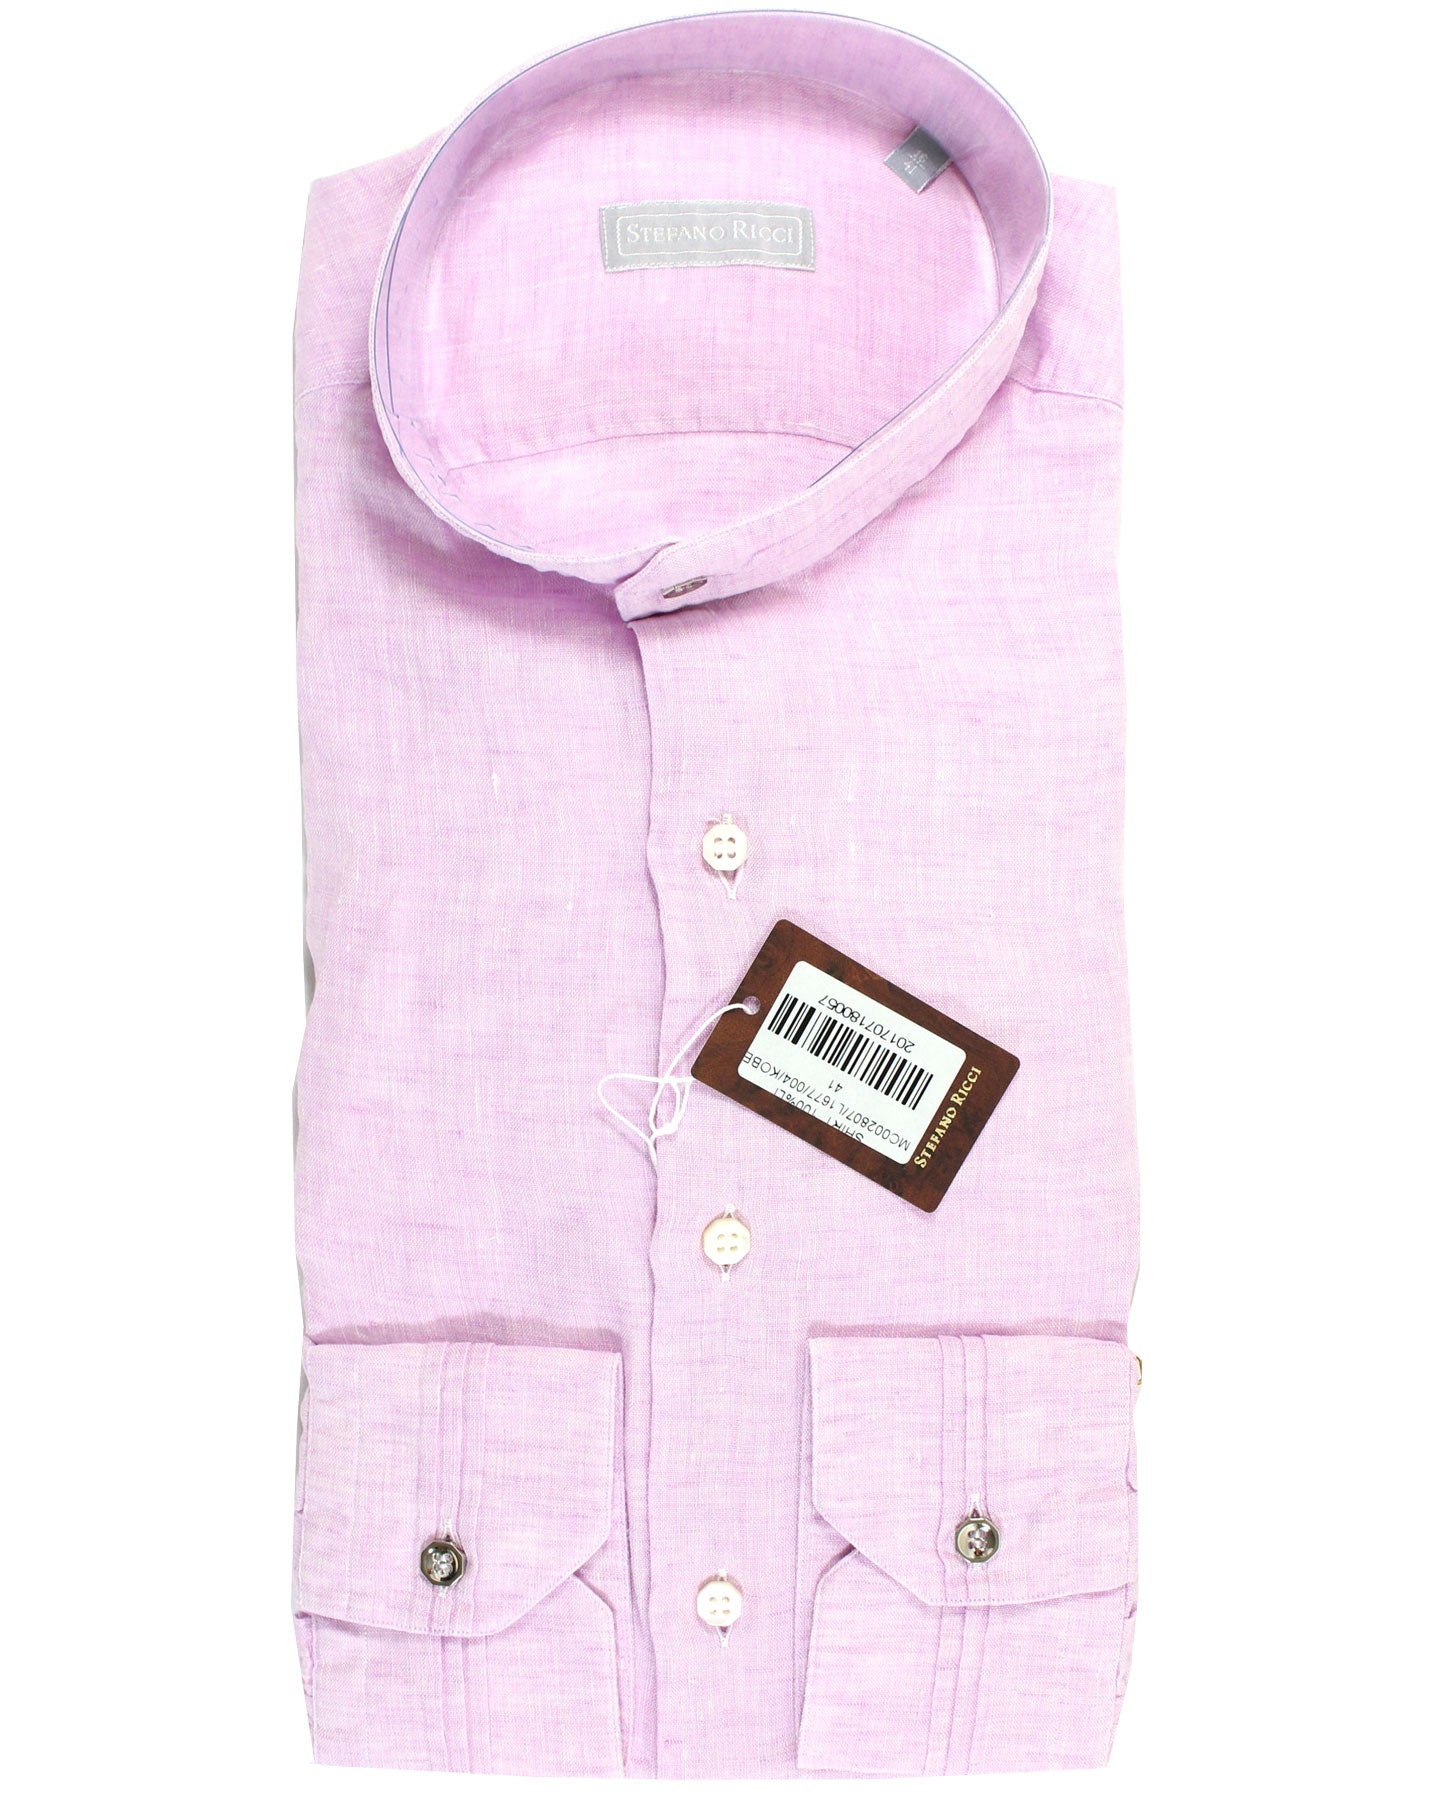 Stefano Ricci Shirt Pink Solid 41 - 16